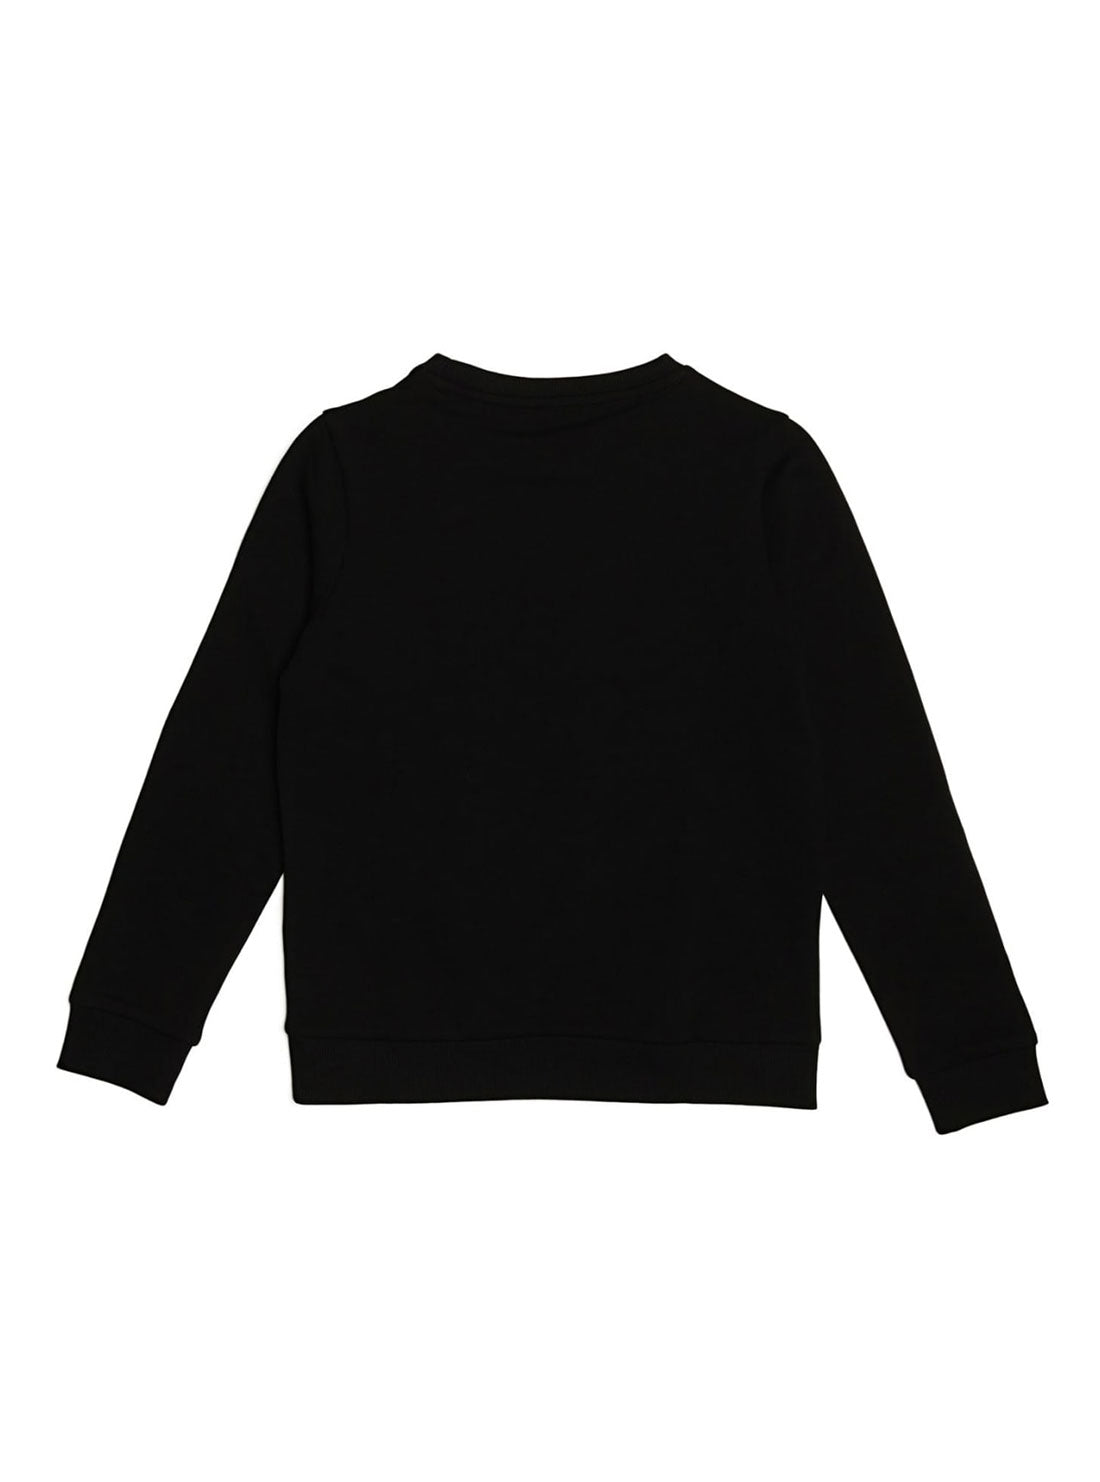 GUESS Big Boys Black Long Sleeve Fleece Pullover Top (7-16) L73Q09K5WK0 Back View